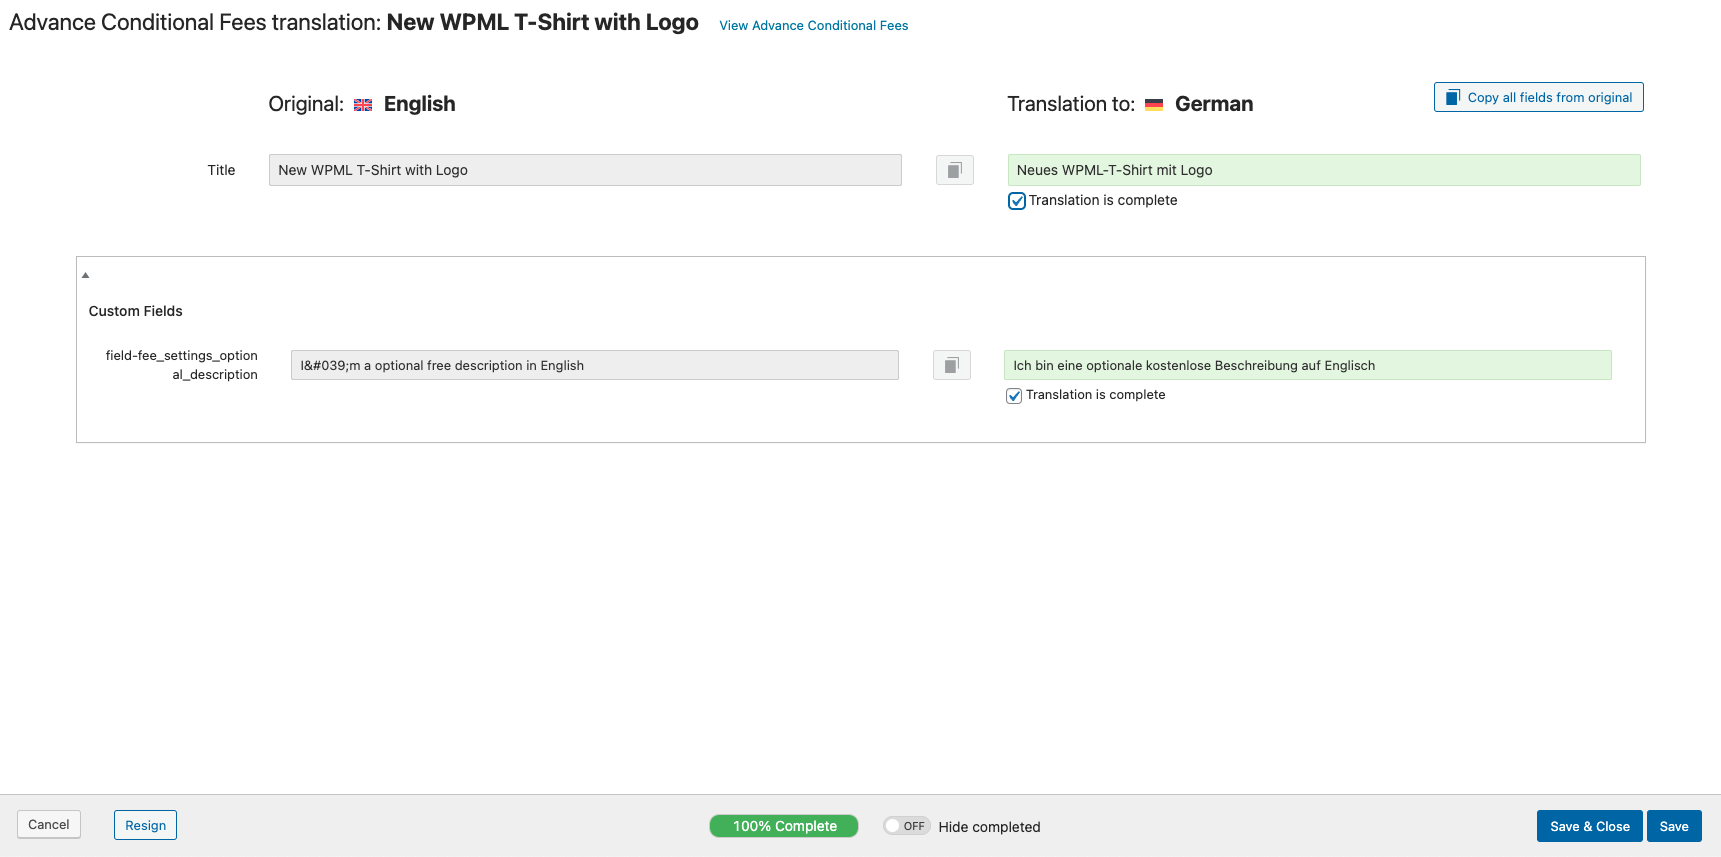 WPML advanced editor for translation